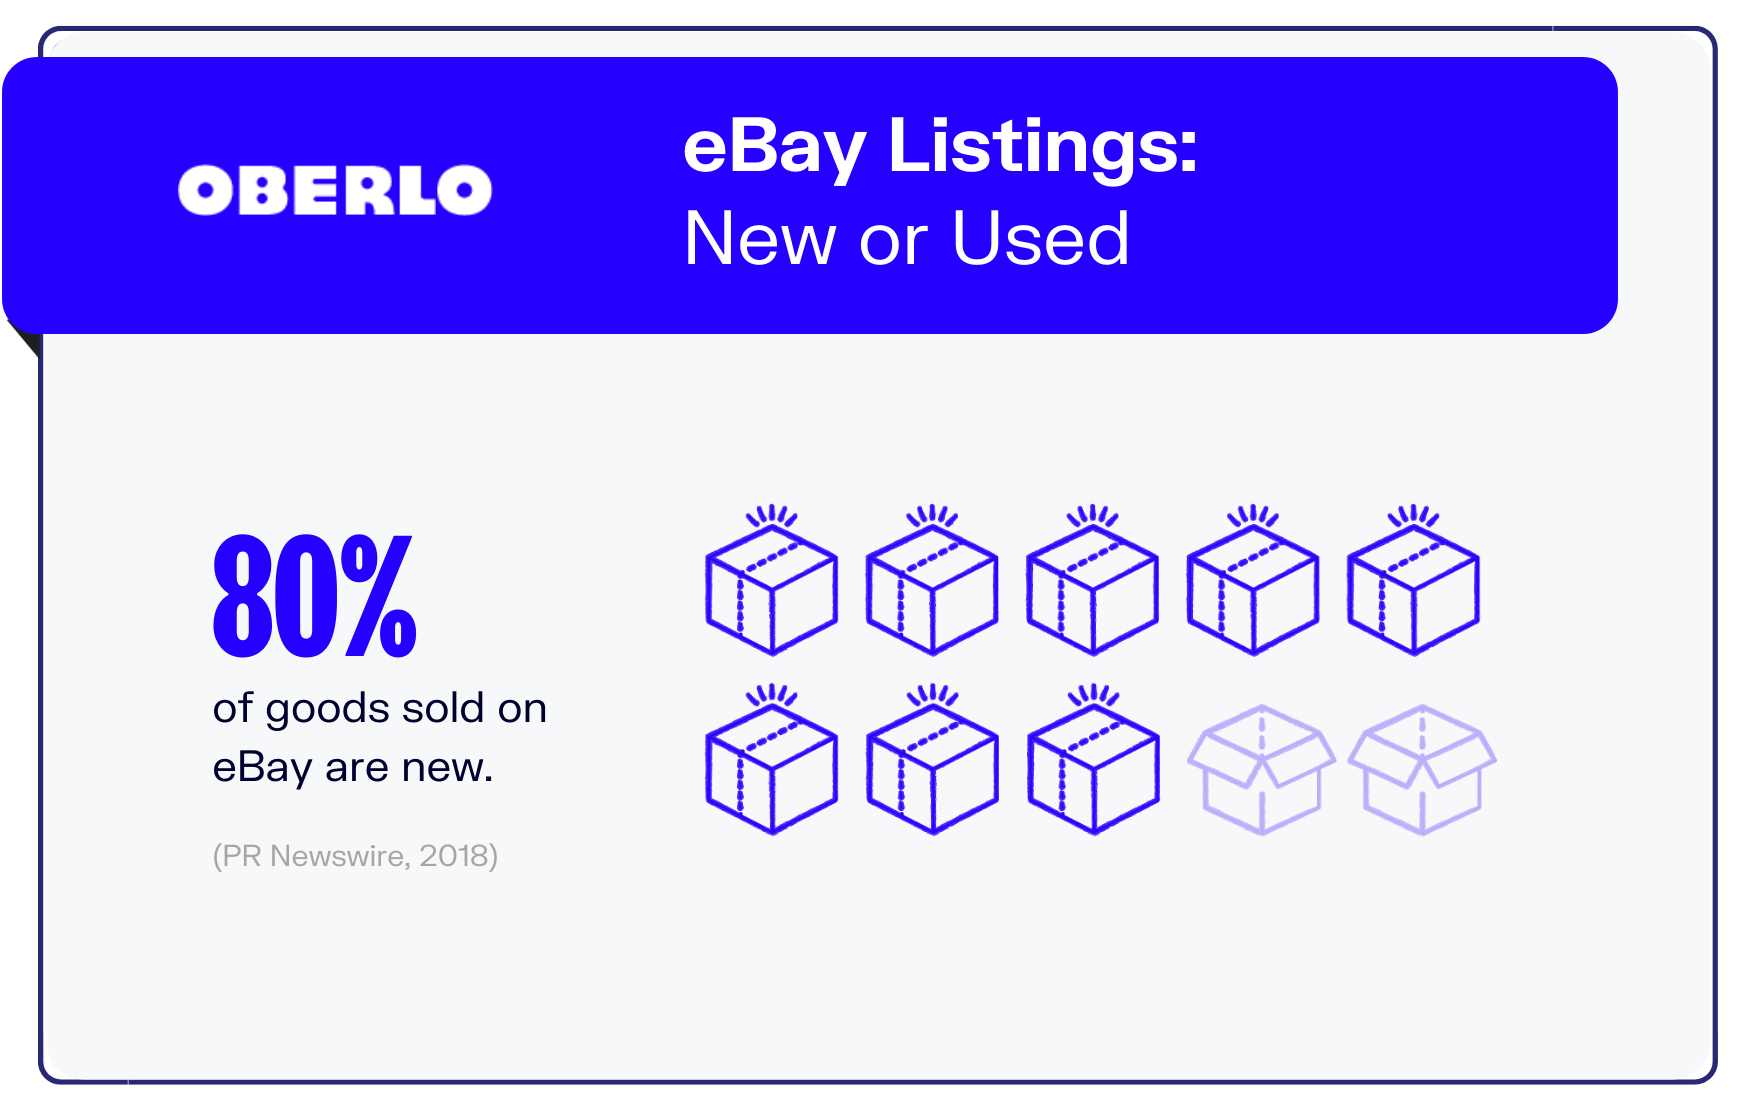 ebay statistics graphic9